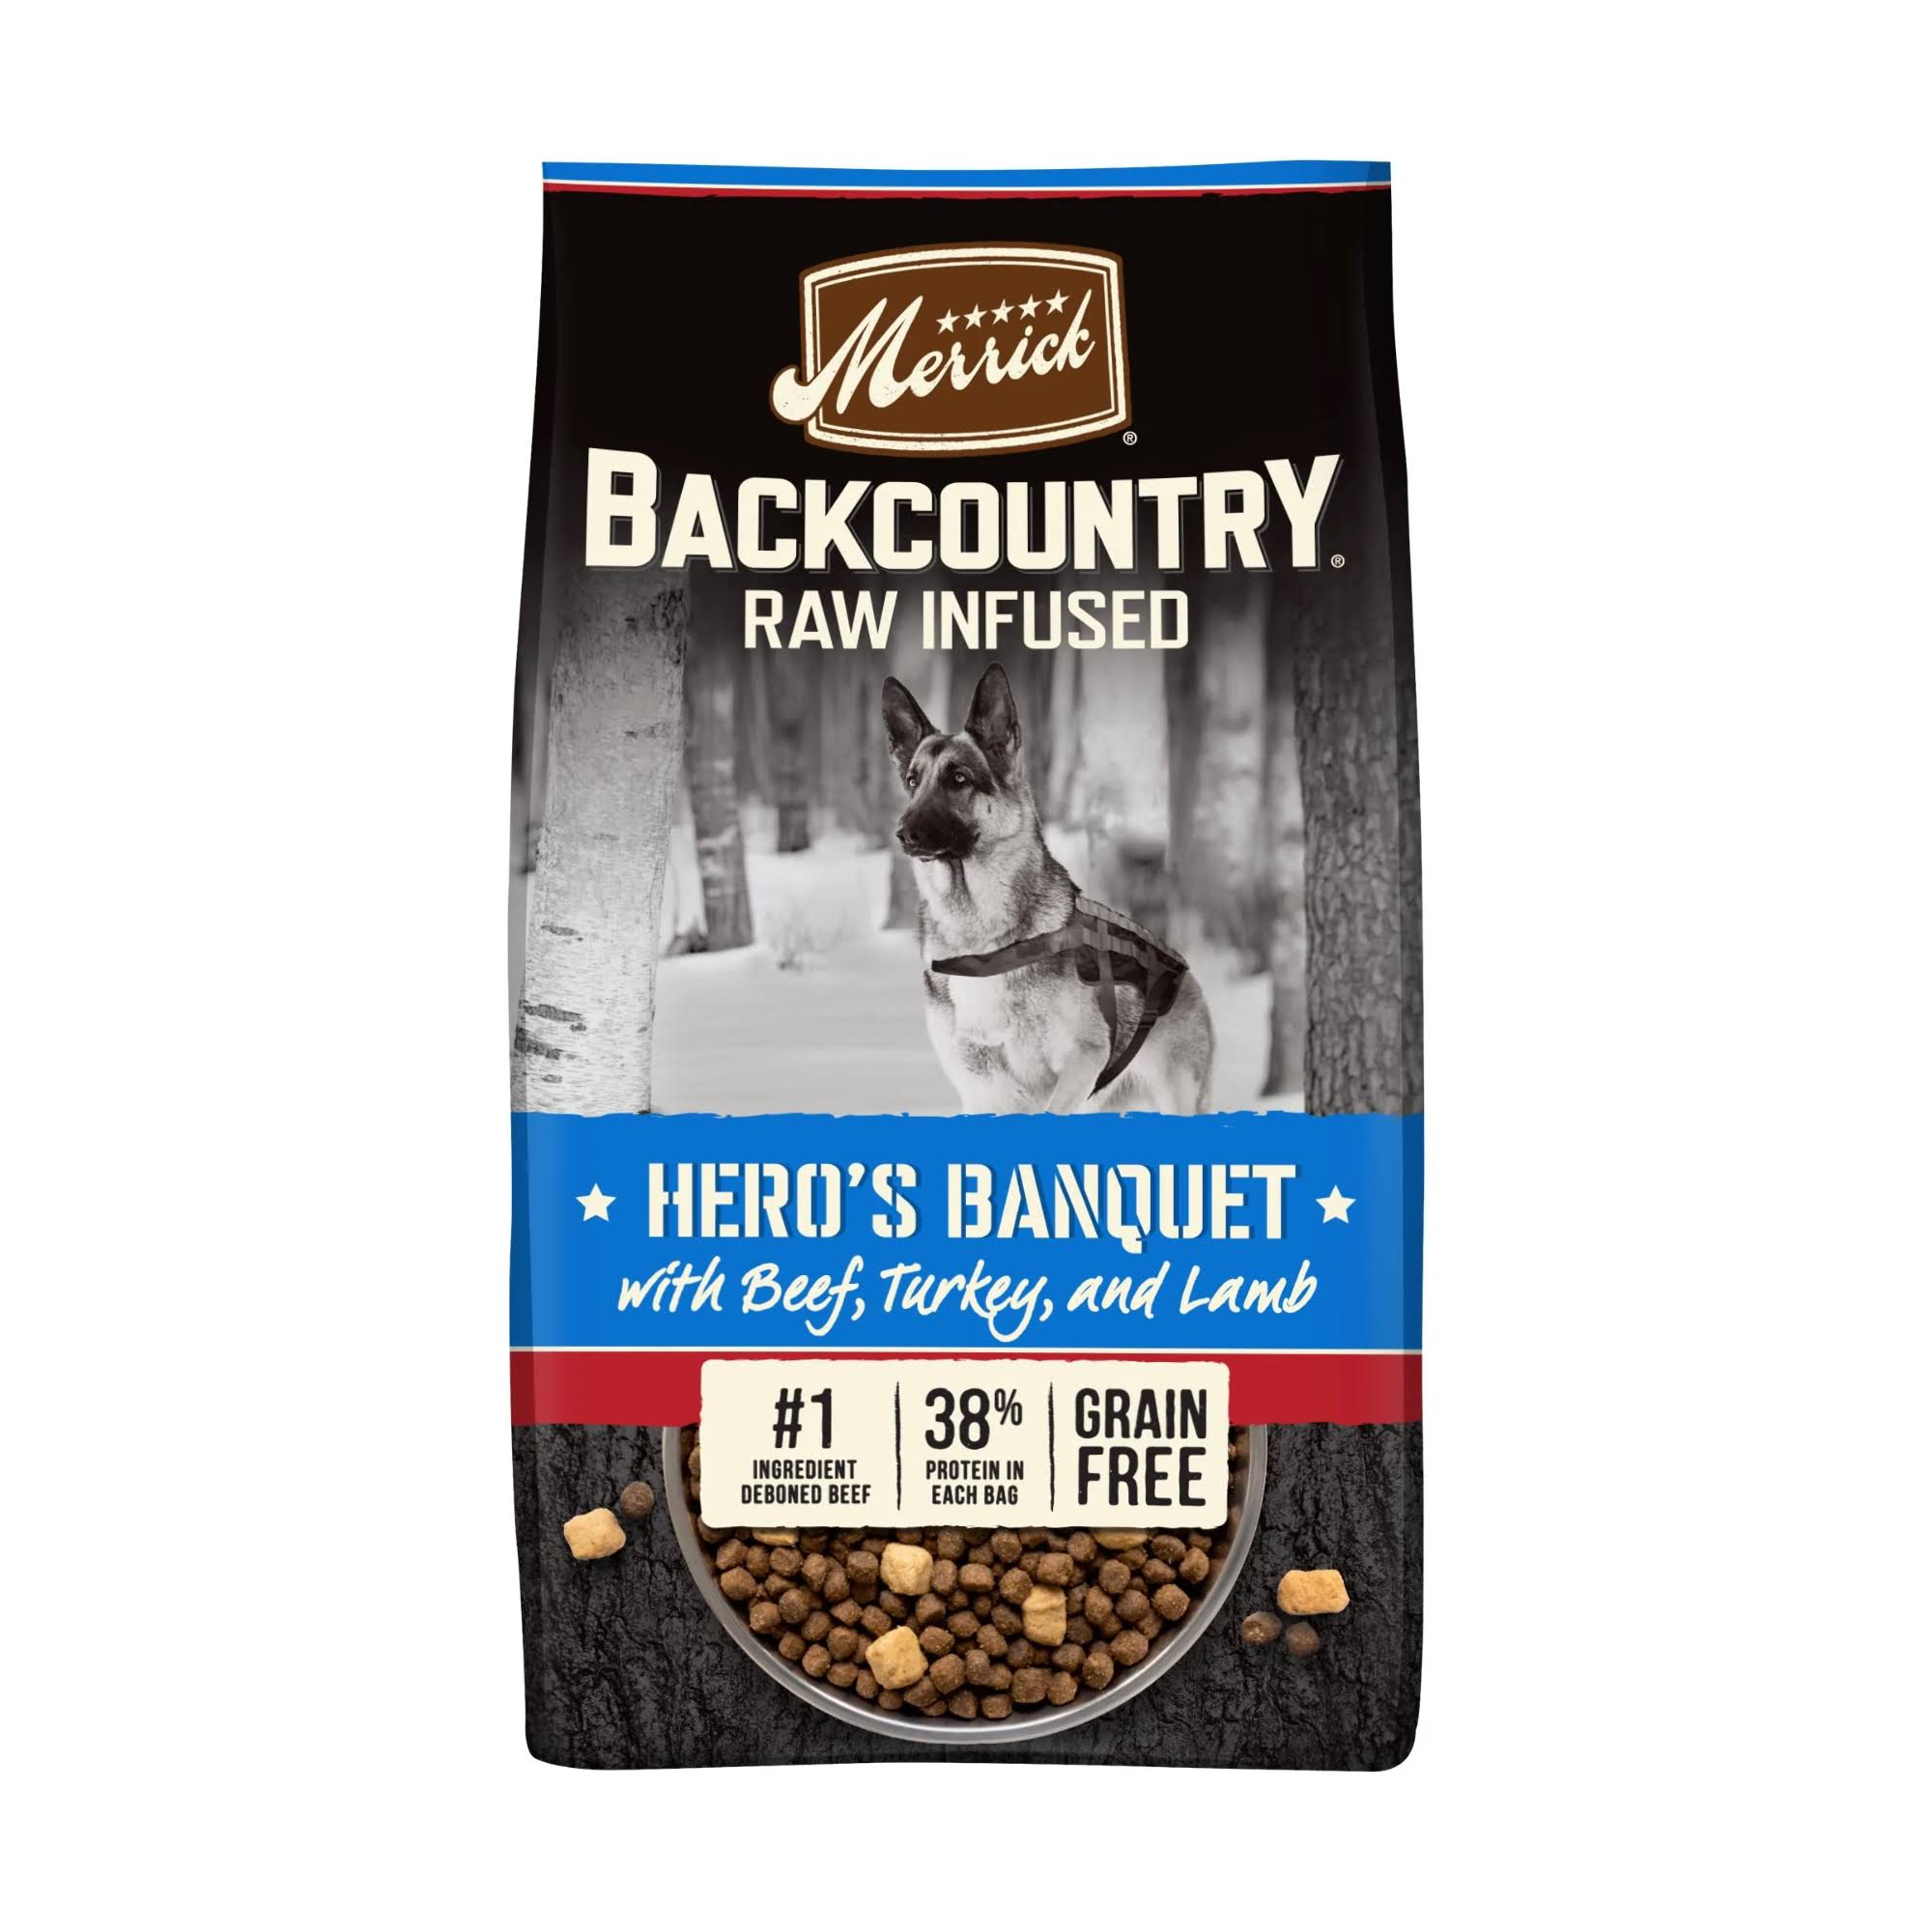 Merrick Backcountry Raw Infused Grain Free Dog Food, Hero's Banquet Recipe, Freeze Dried Dog Food - 4 Lb Bag